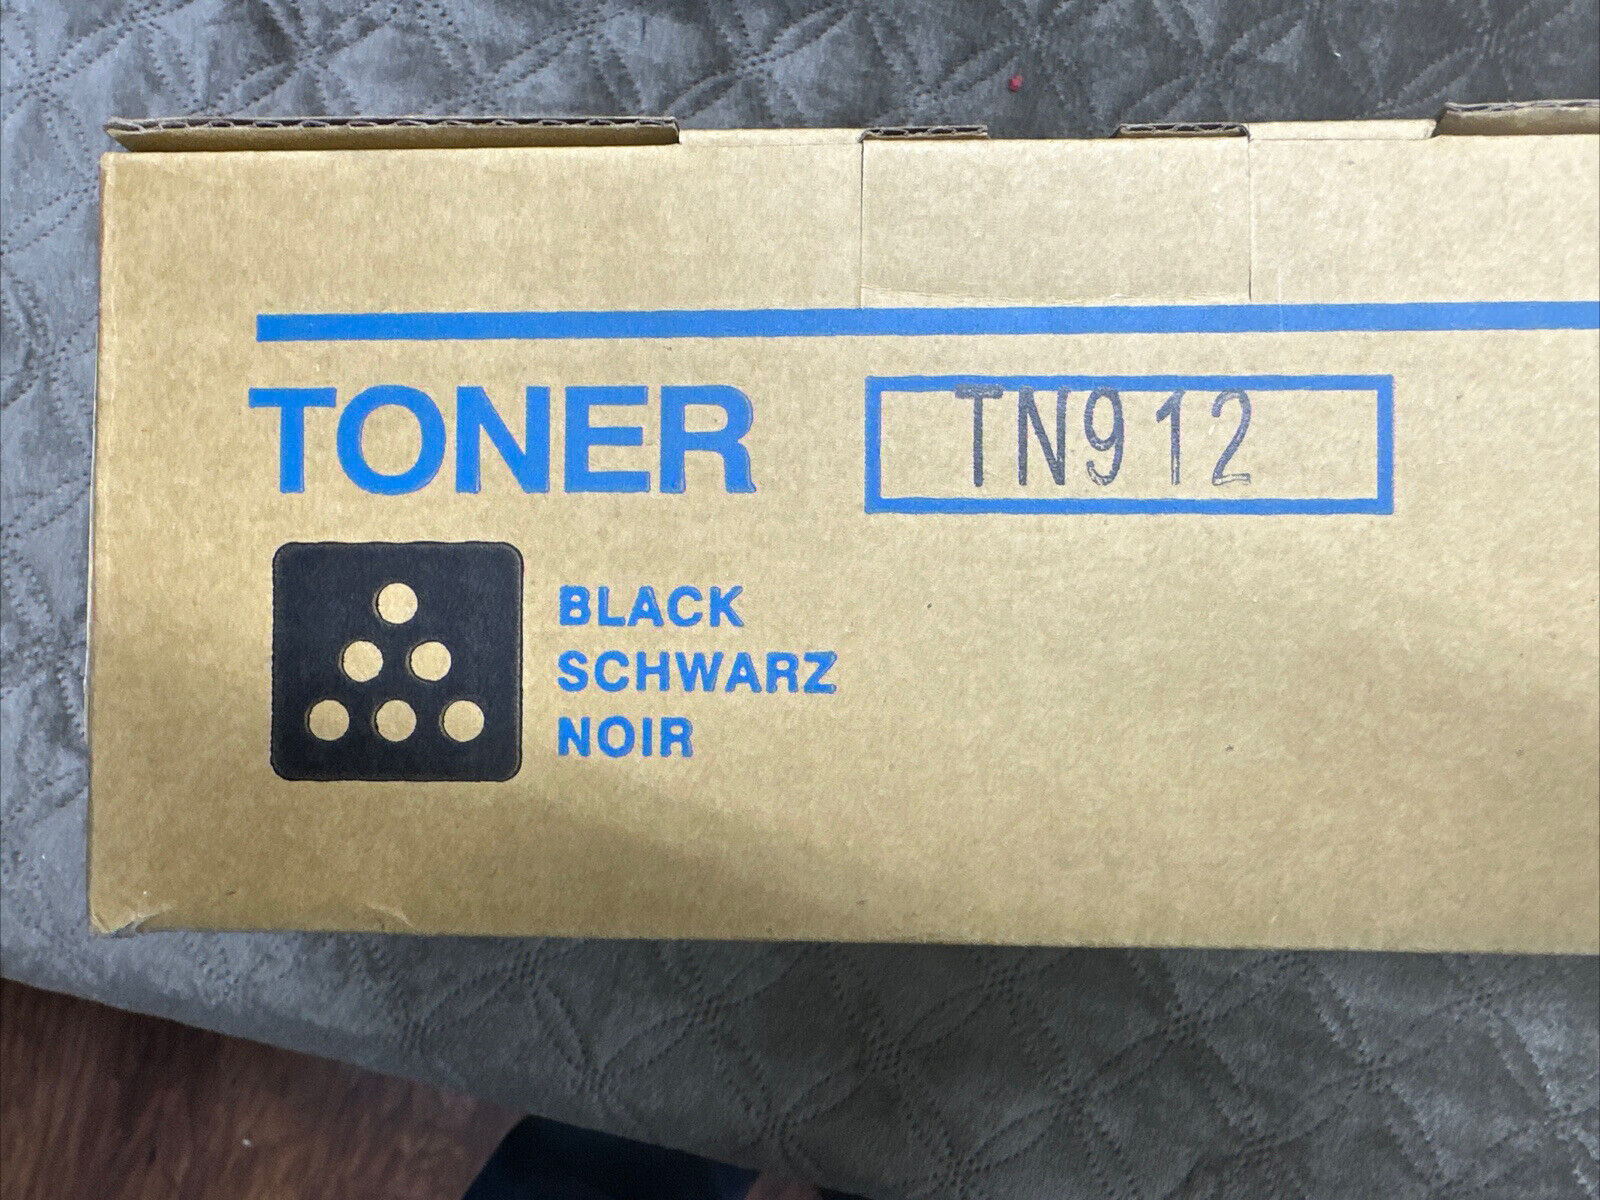 Konica Minolta TN-912 Black Toner Cartridge Replacement for Bizhub 958 